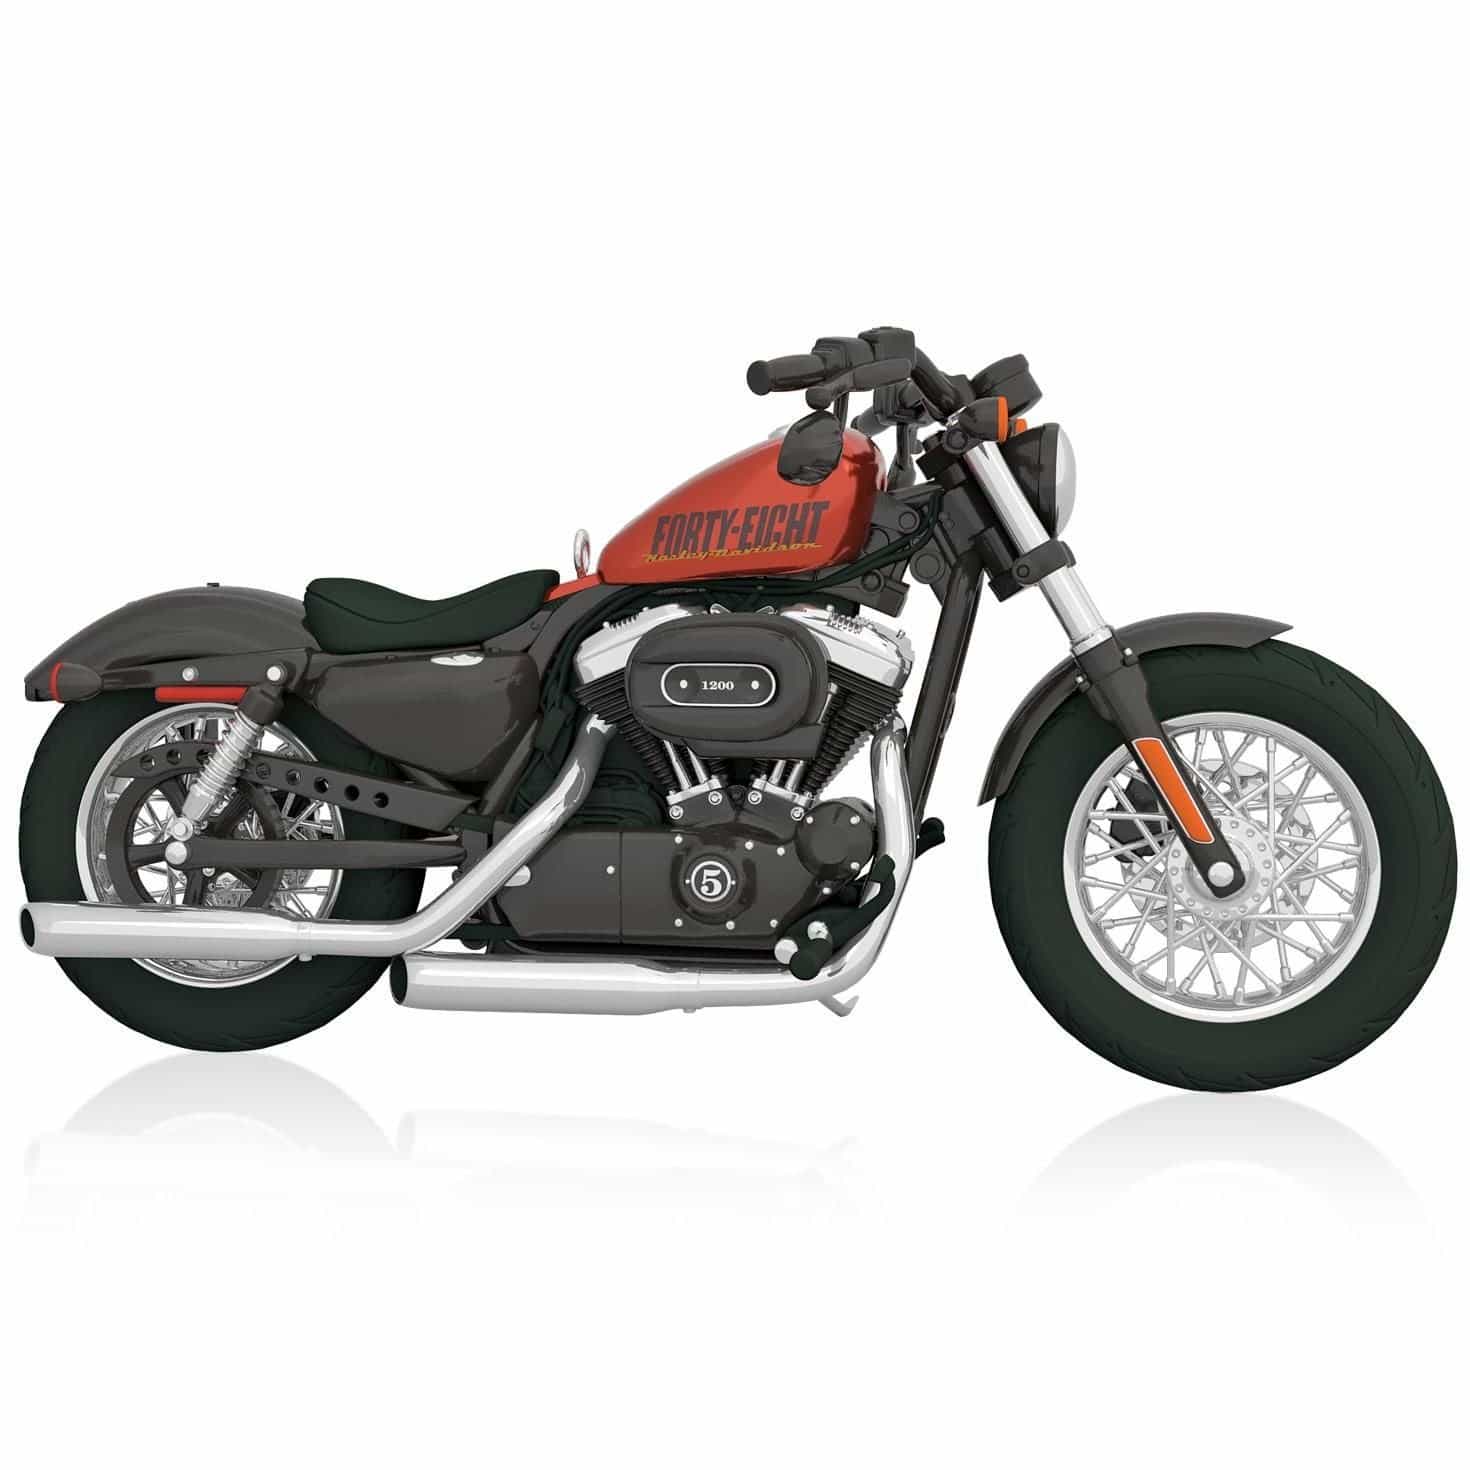 Harley-Davidson 2014 Sportster Forty-Eight Motorcycle Ornament 2015 Hallmark